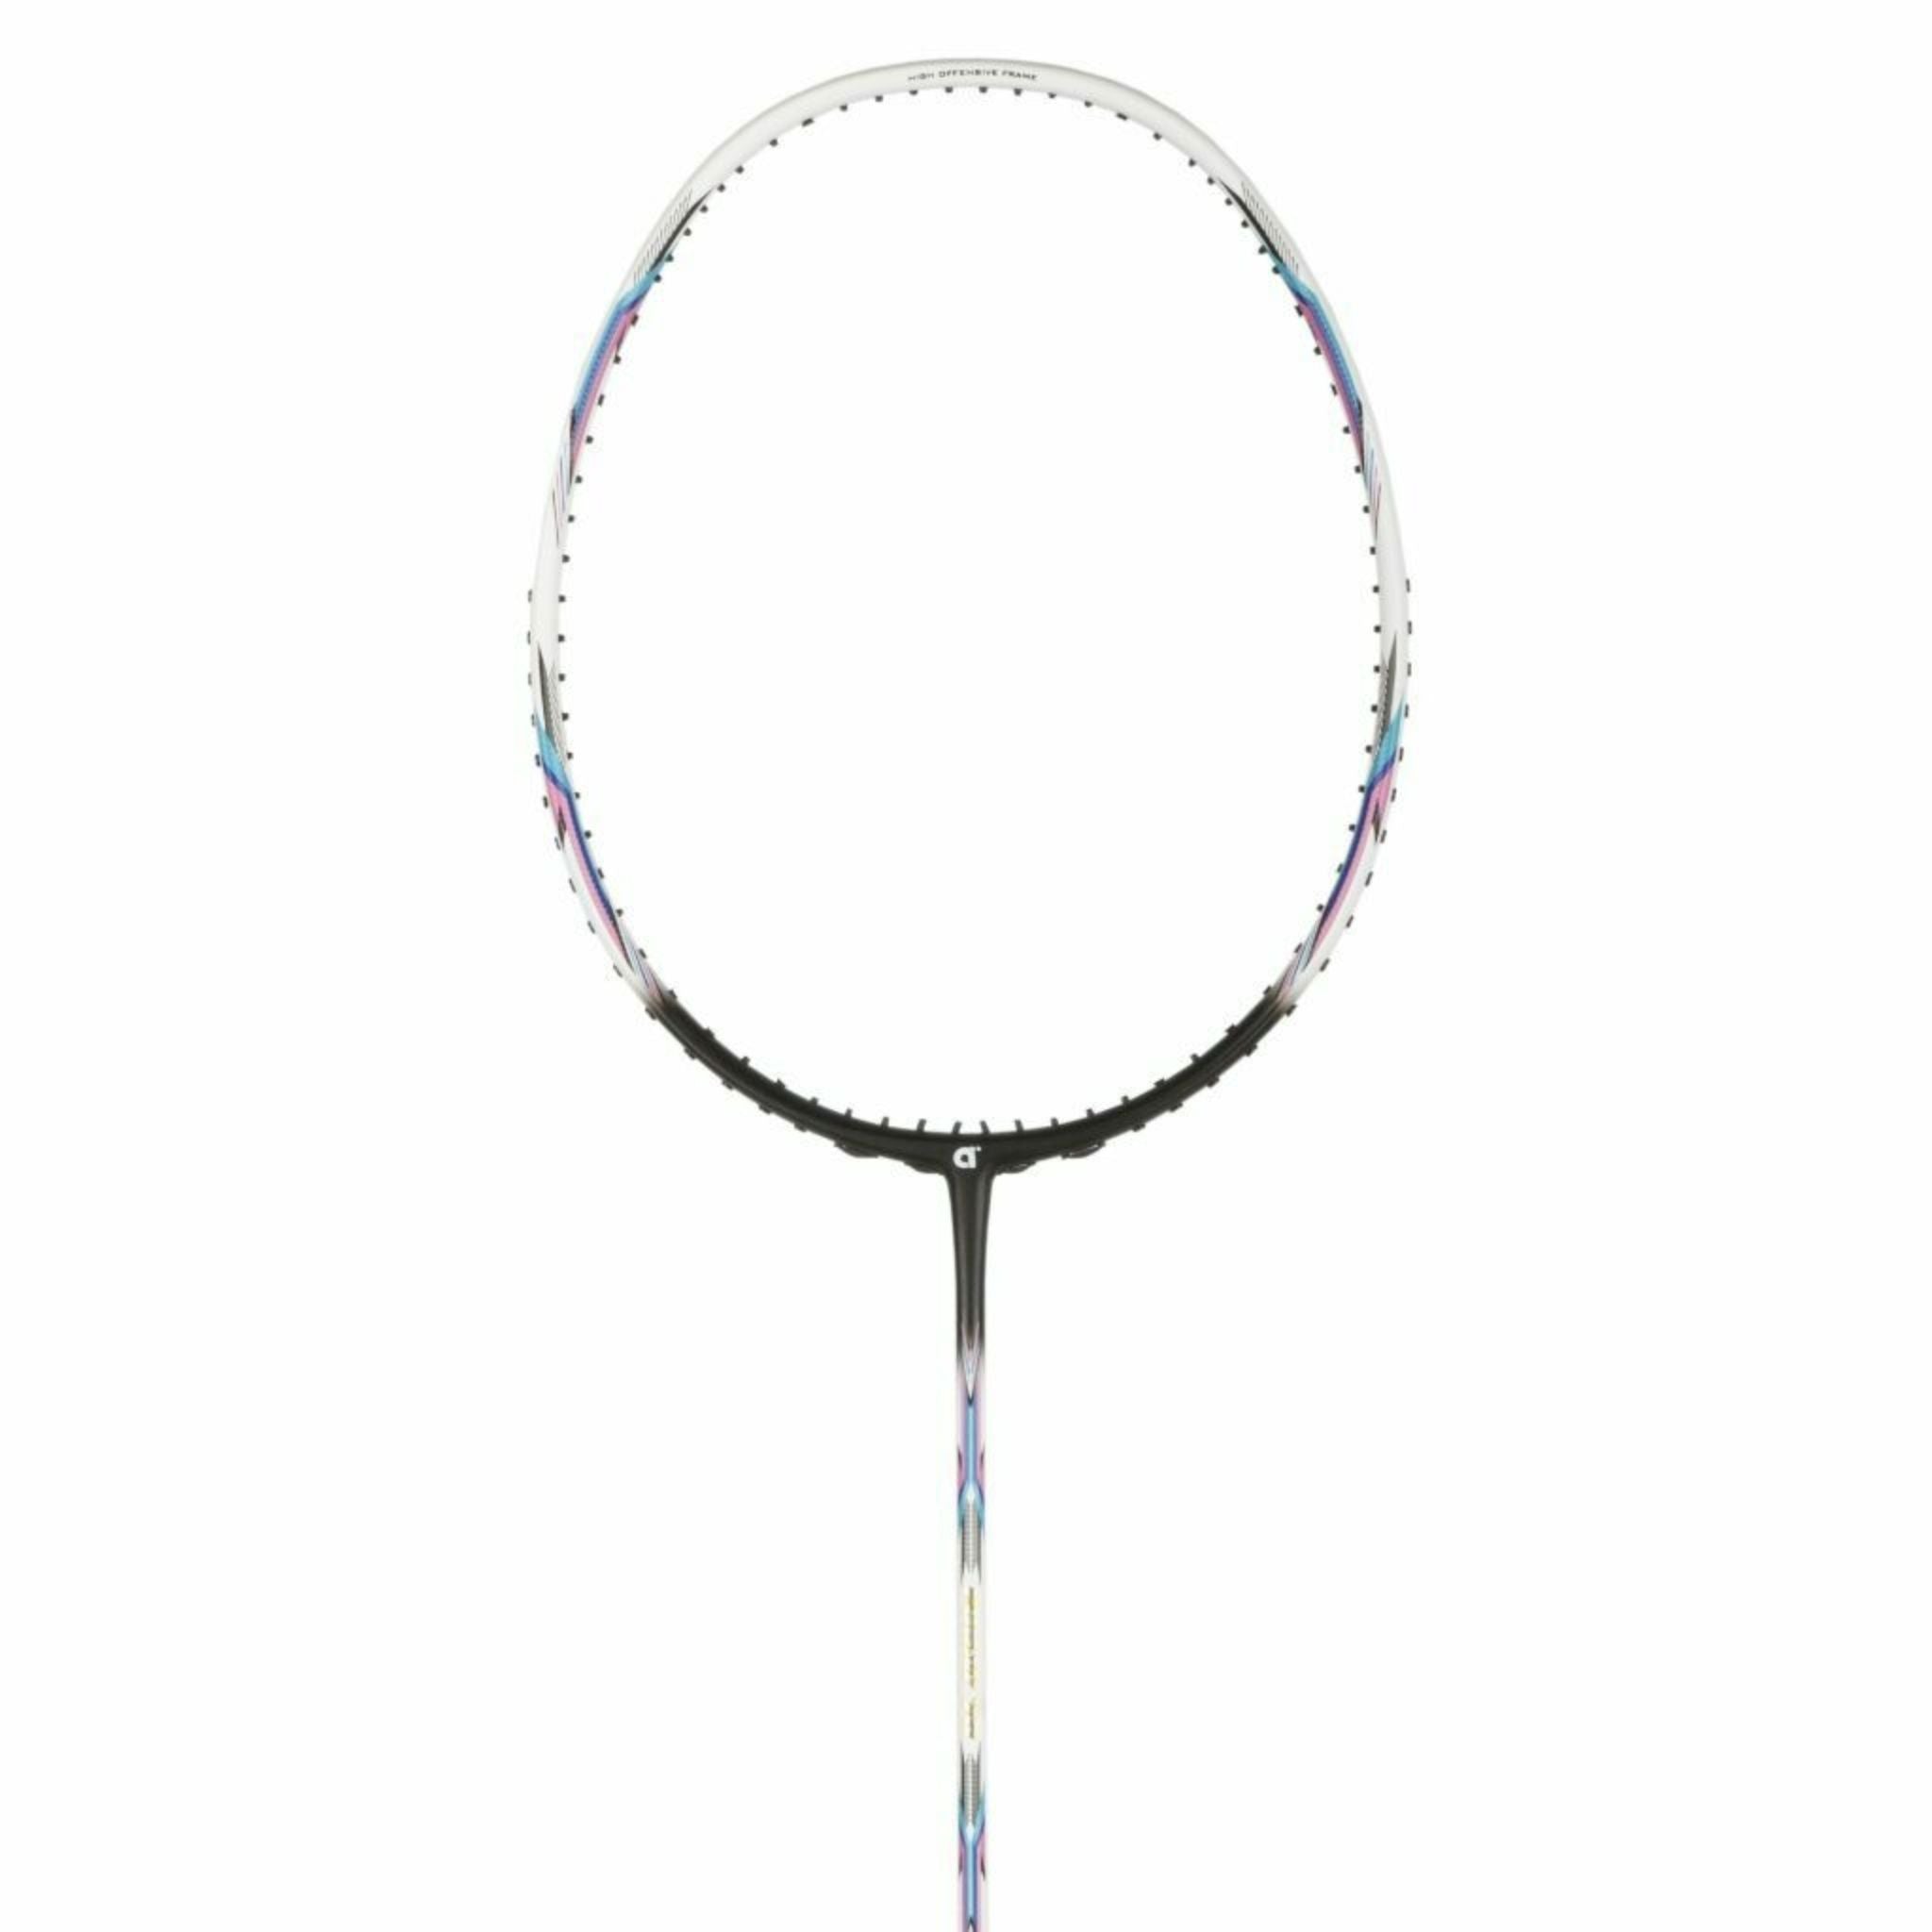 APACS Foray 70 Badminton Racket